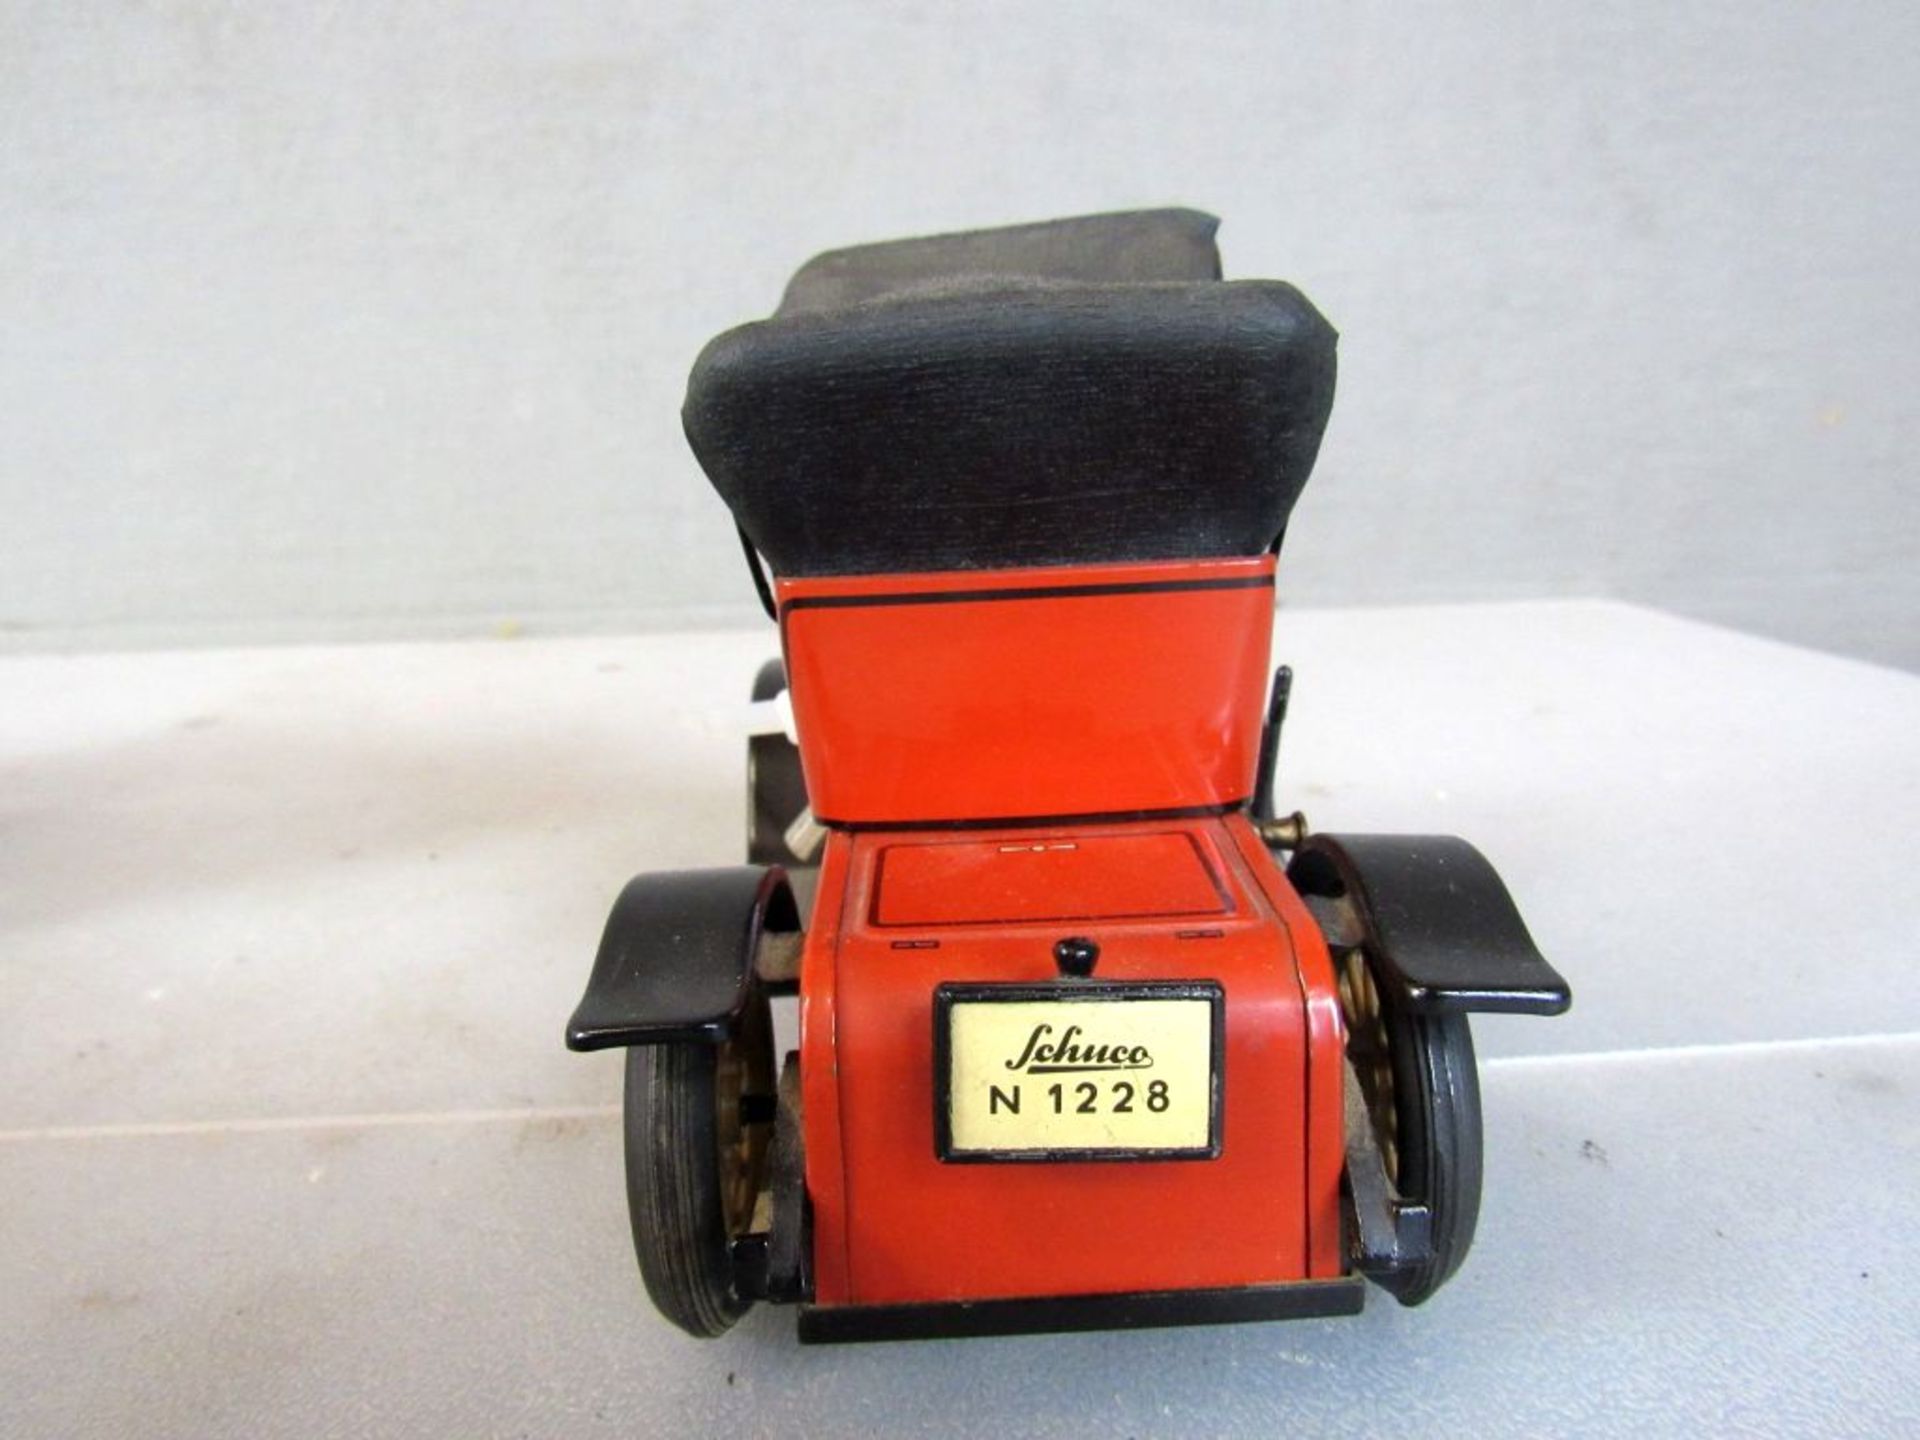 Spielzeug Schuco Modell 1228 Oldtimer - Image 7 of 10